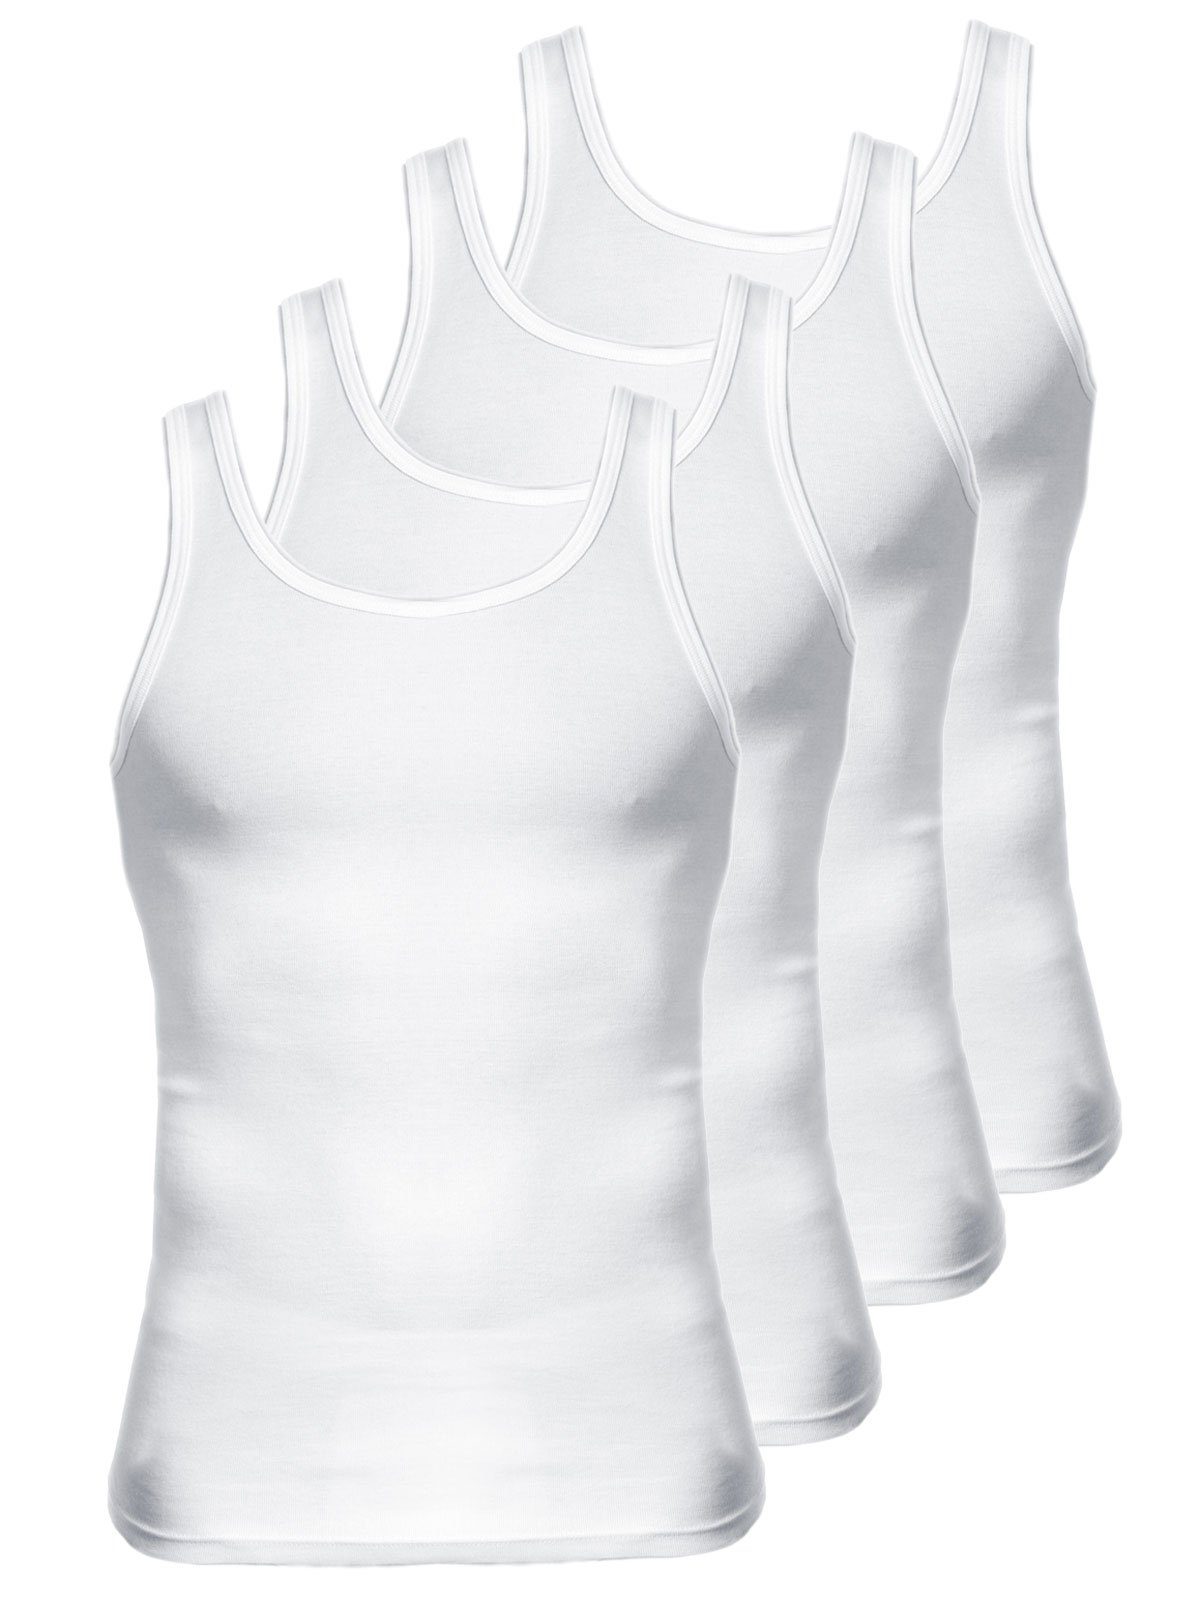 KUMPF Achselhemd 4er Sparpack Herren Unterhemd Bio Cotton (Spar-Set, 4-St) - weiss | Ärmellose Unterhemden